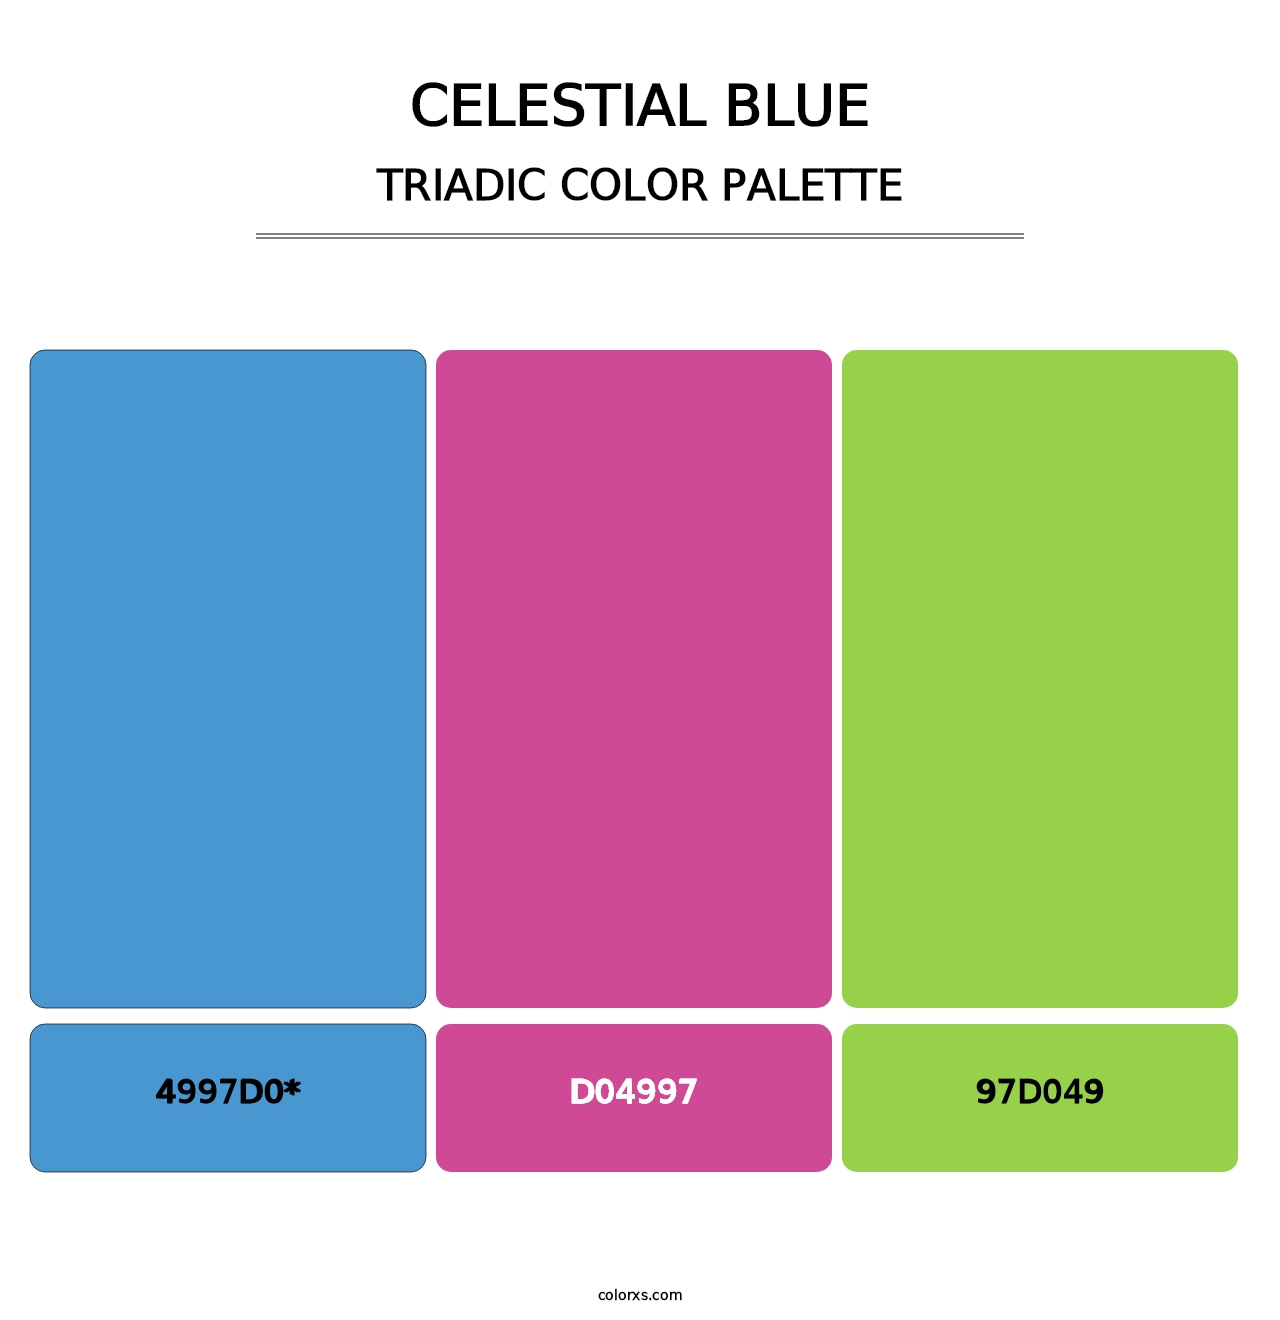 Celestial Blue - Triadic Color Palette